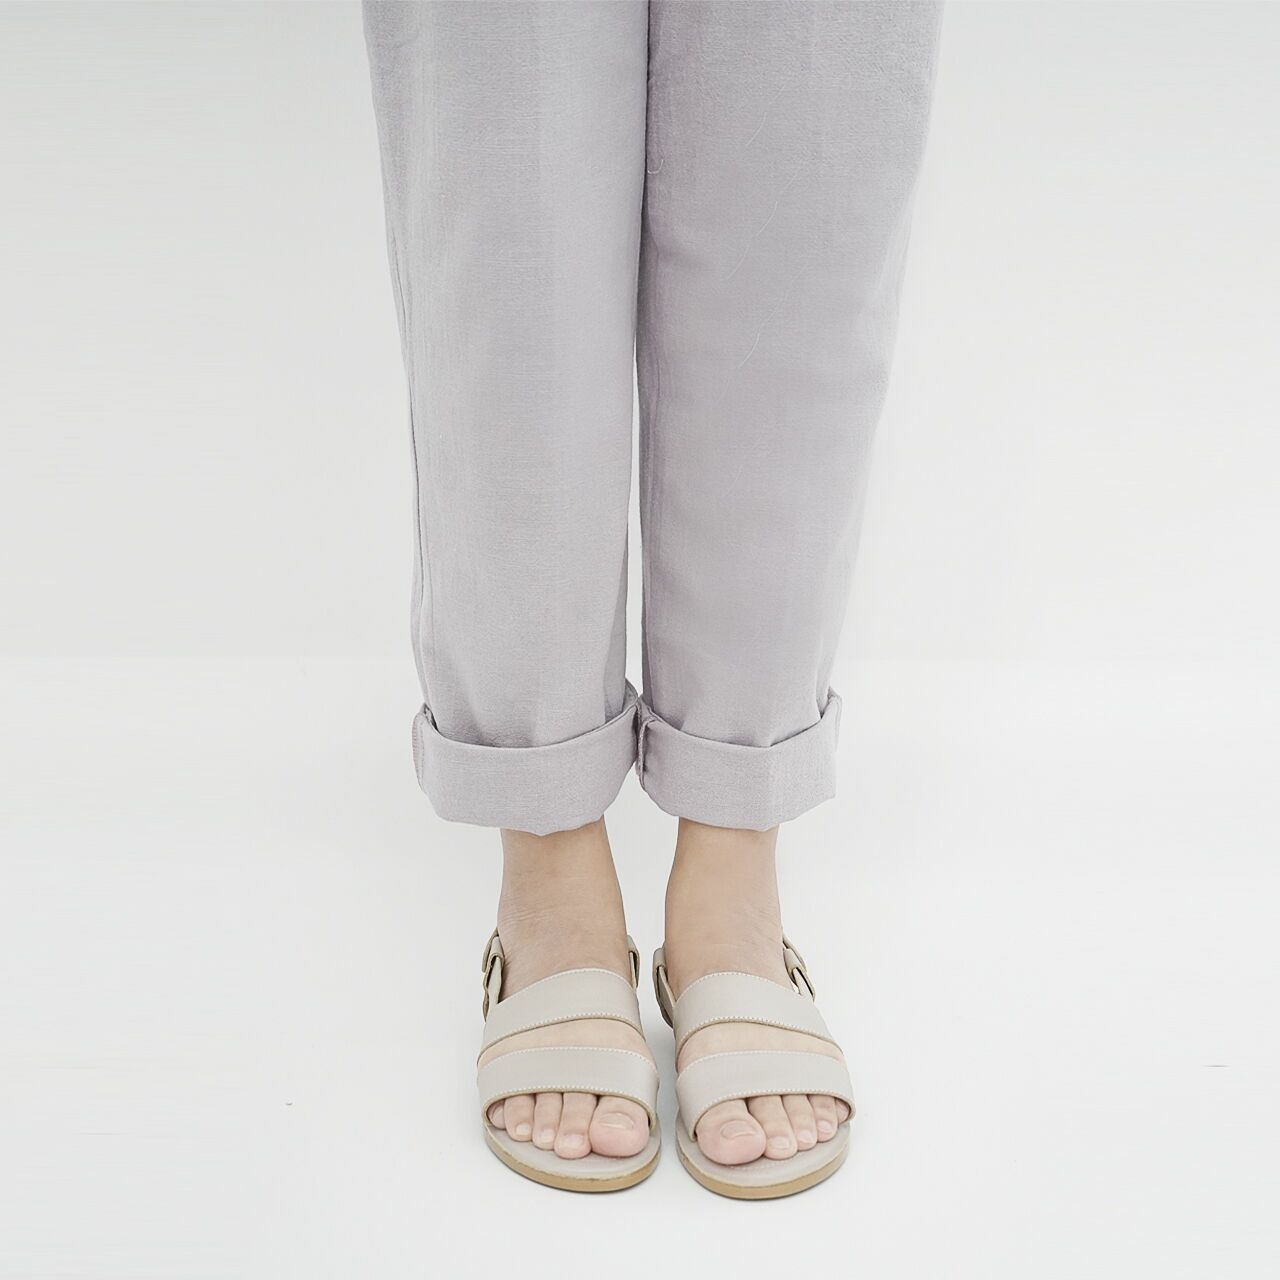 Pvra Silver Gillian Exclusive Sandals [41]